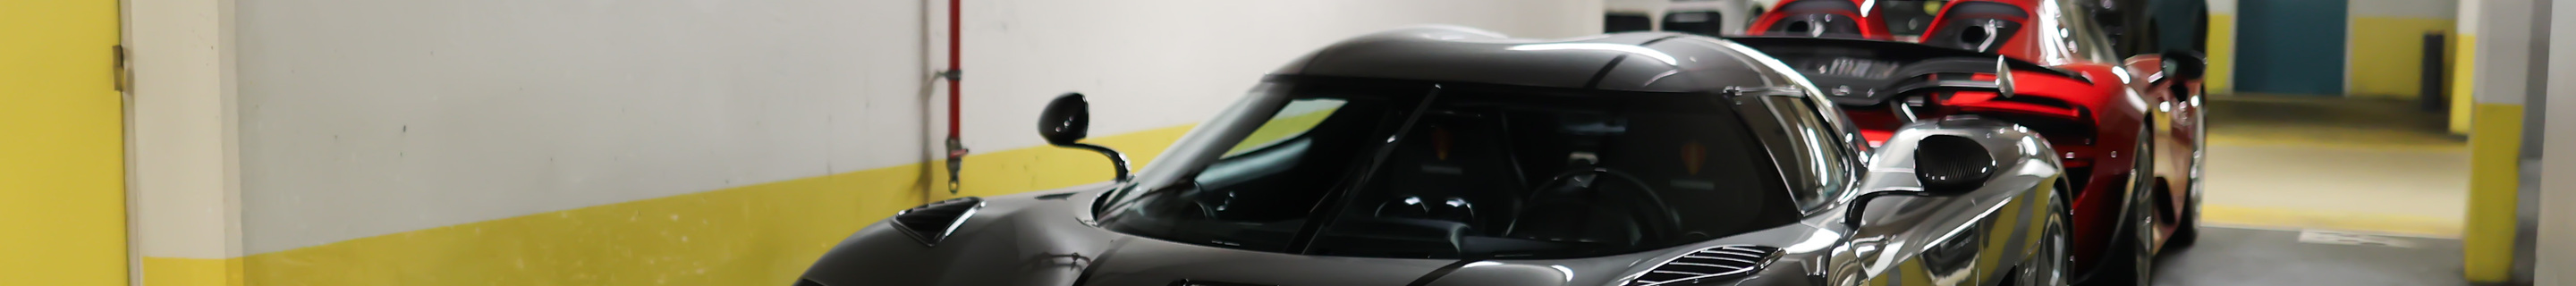 Koenigsegg Agera